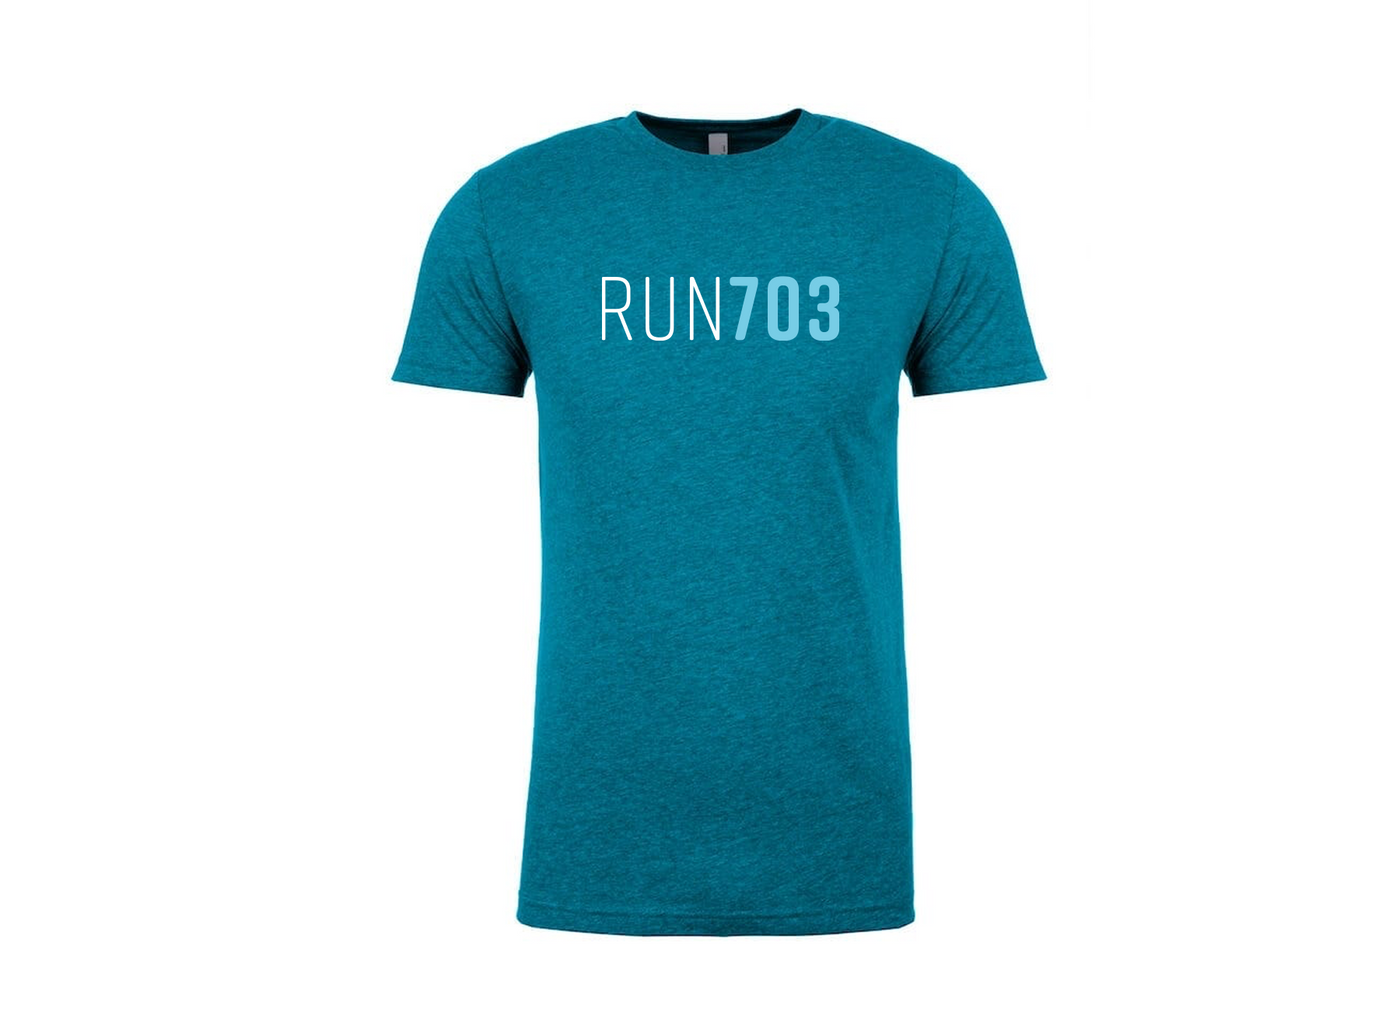 Unisex =PR= Run 703 Graphic Tee - NEXT-RUN703